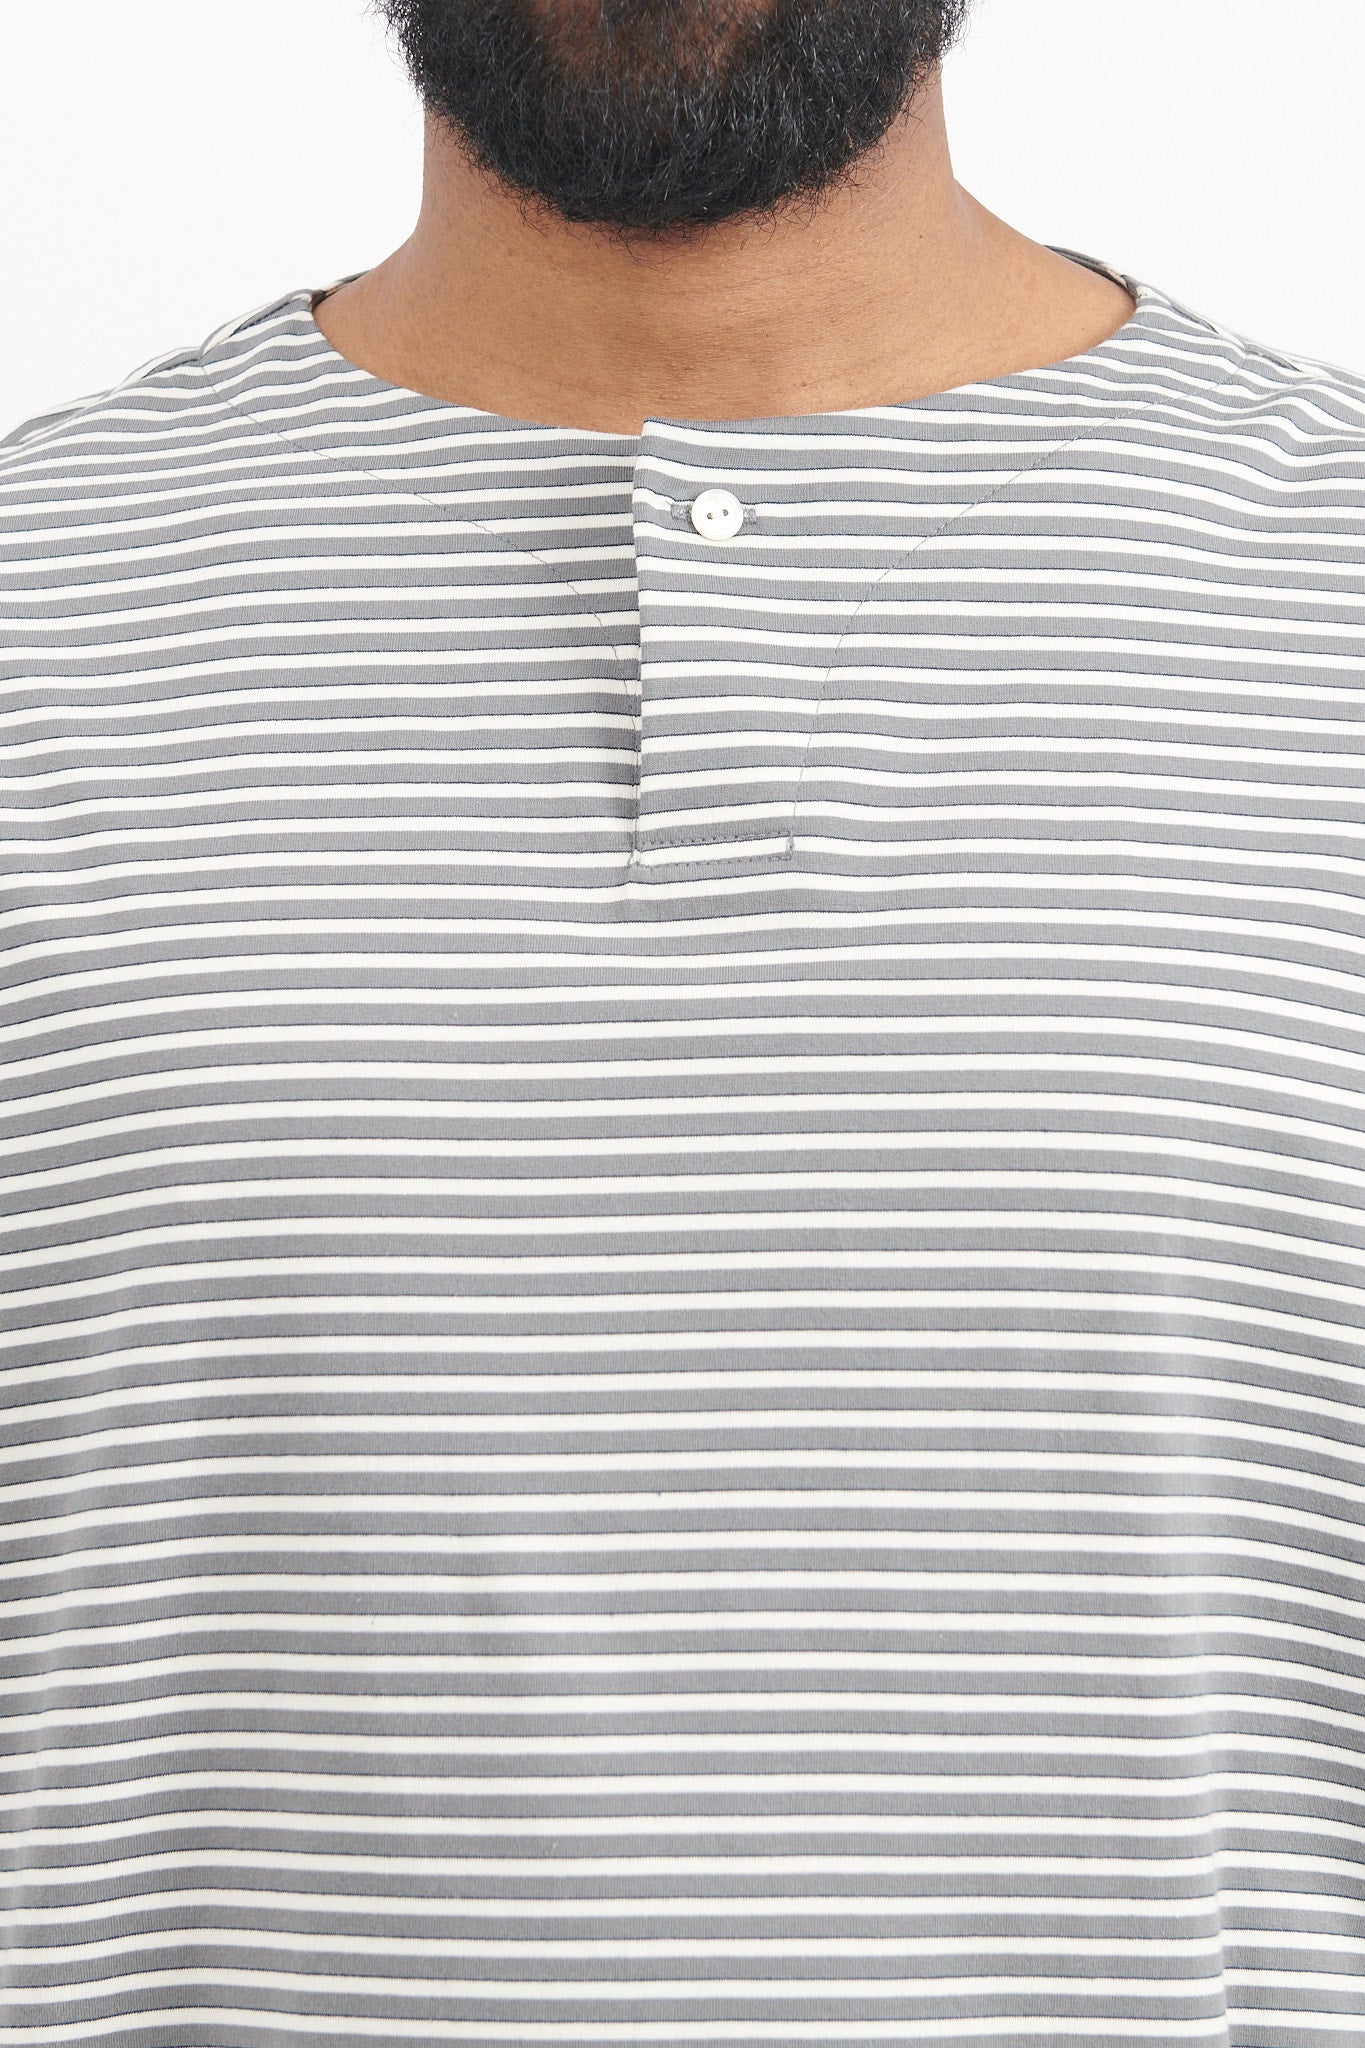 Striped Long Sleeve - Grey/White